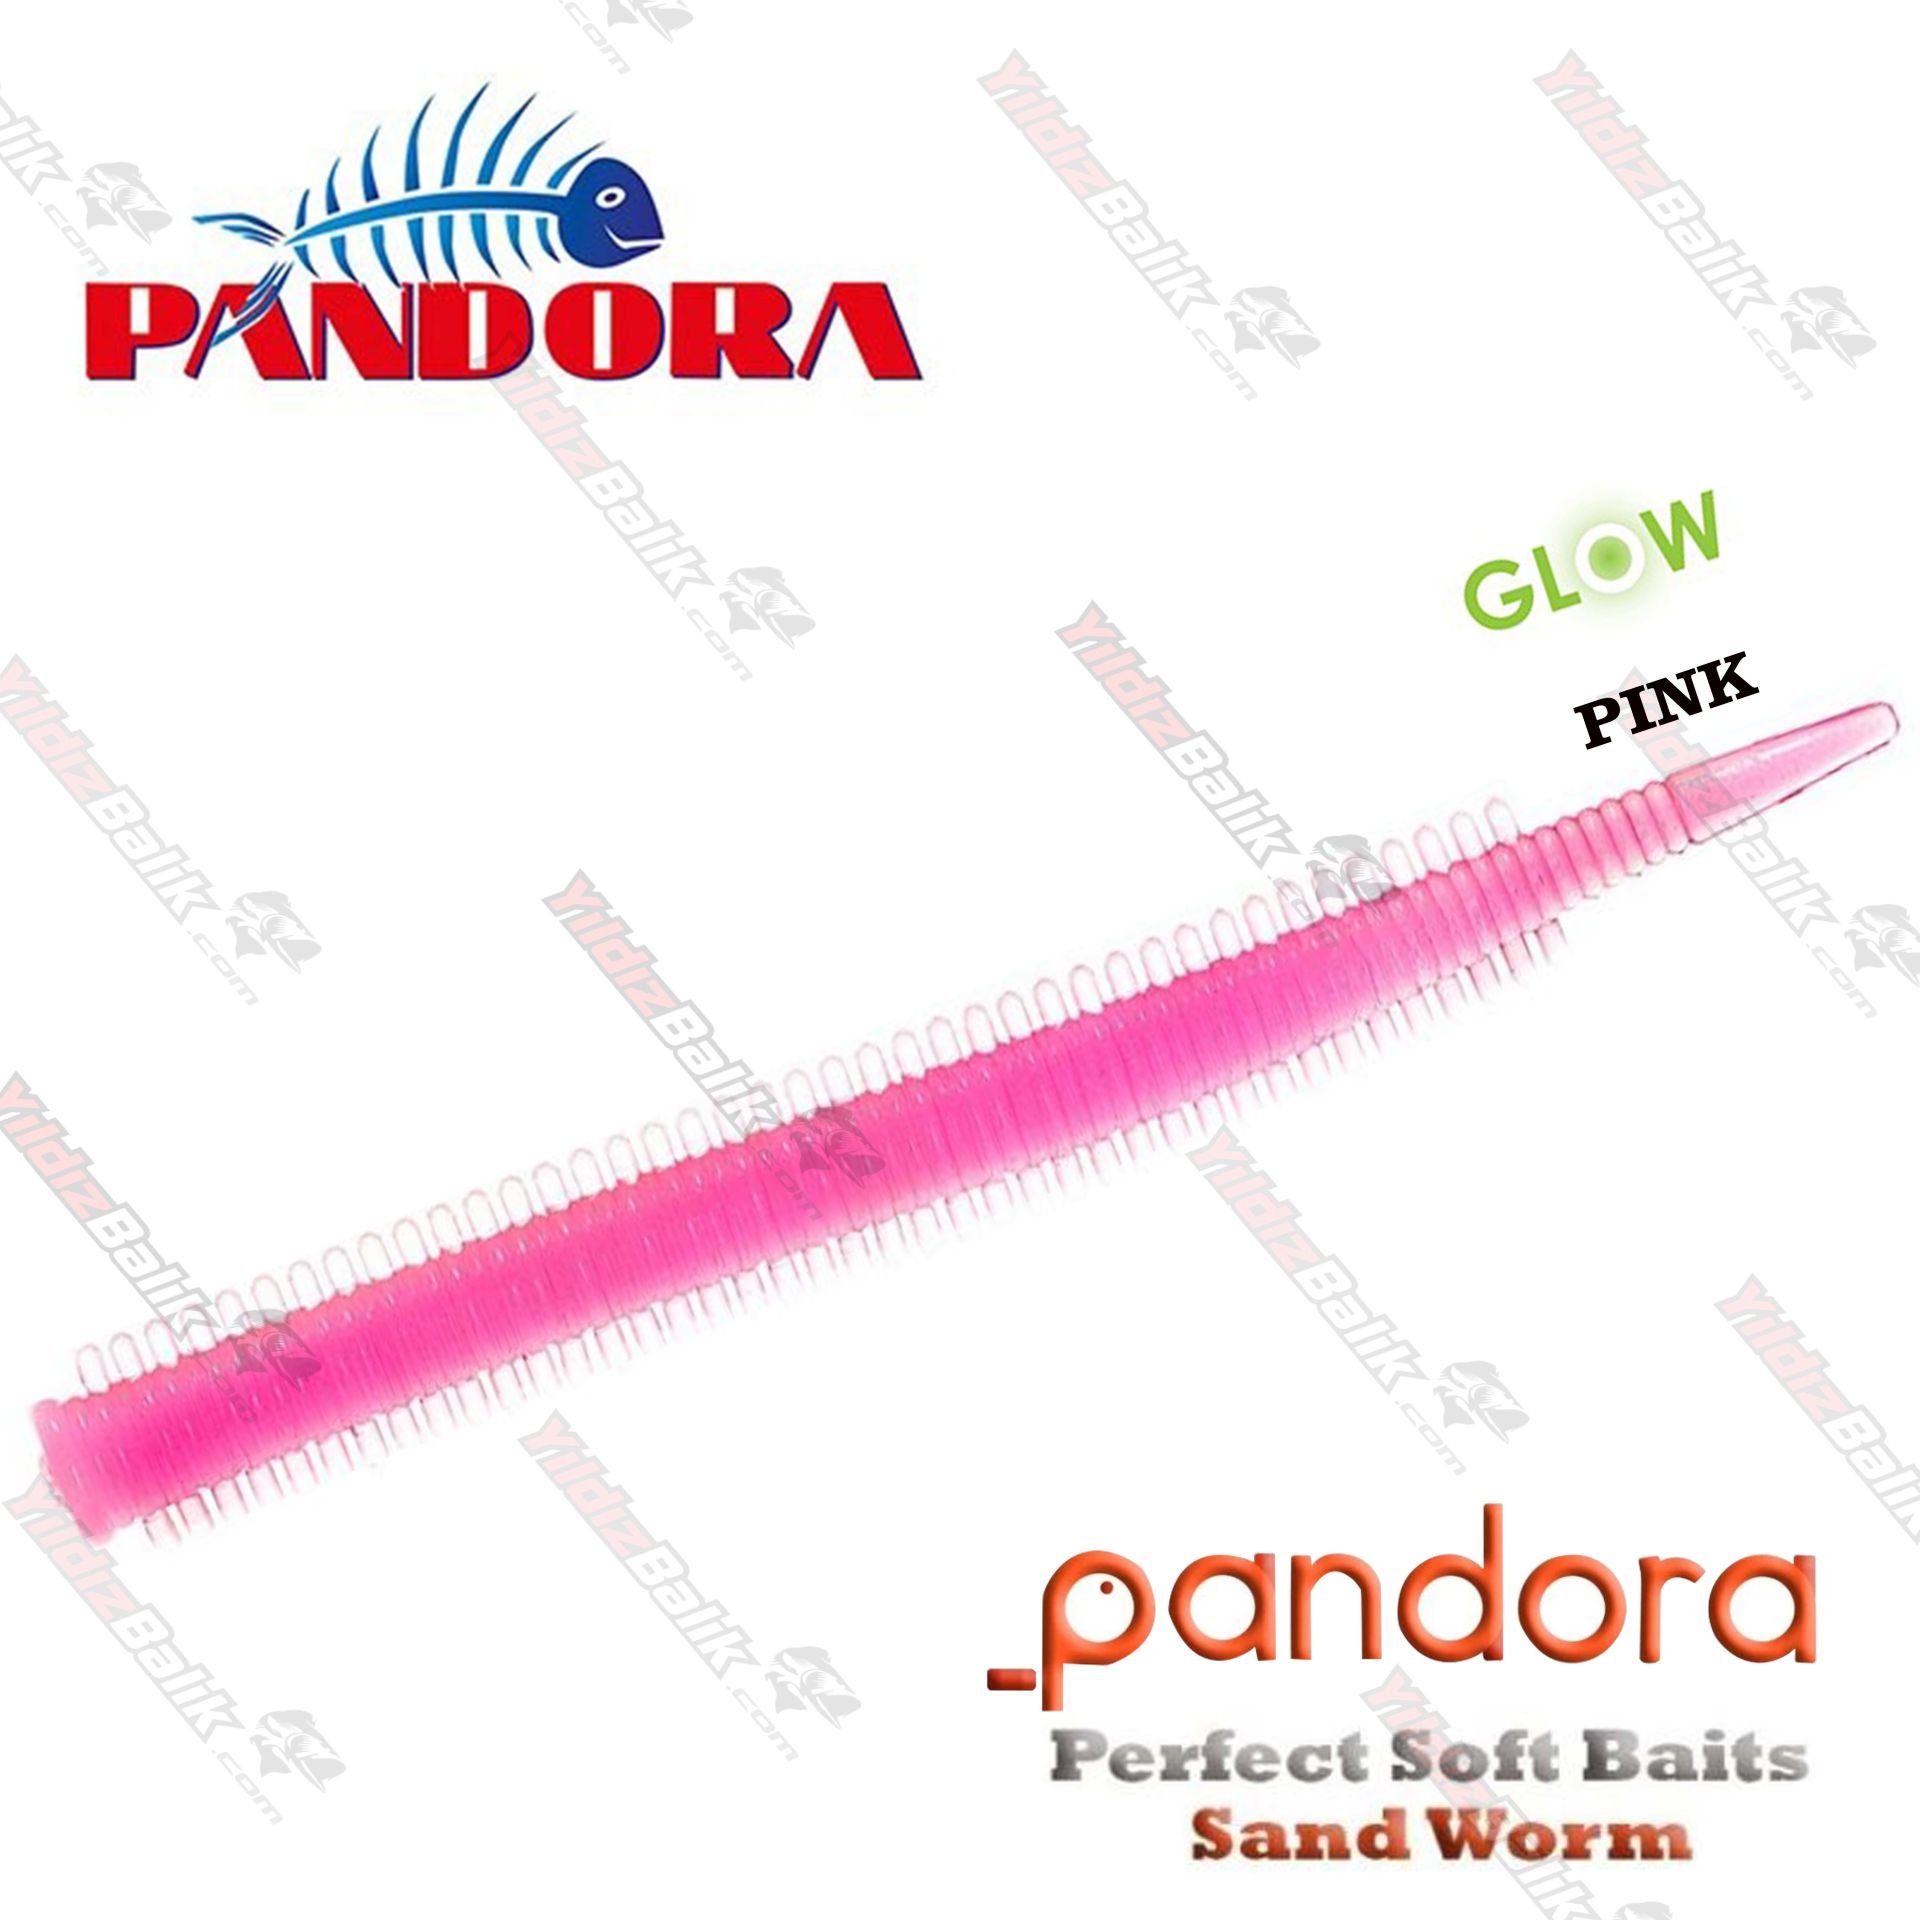 https://ideacdn.net/idea/as/57/myassets/products/792/pandora-perfect-soft-baits-sandworm-pink.jpg?revision=1697143329